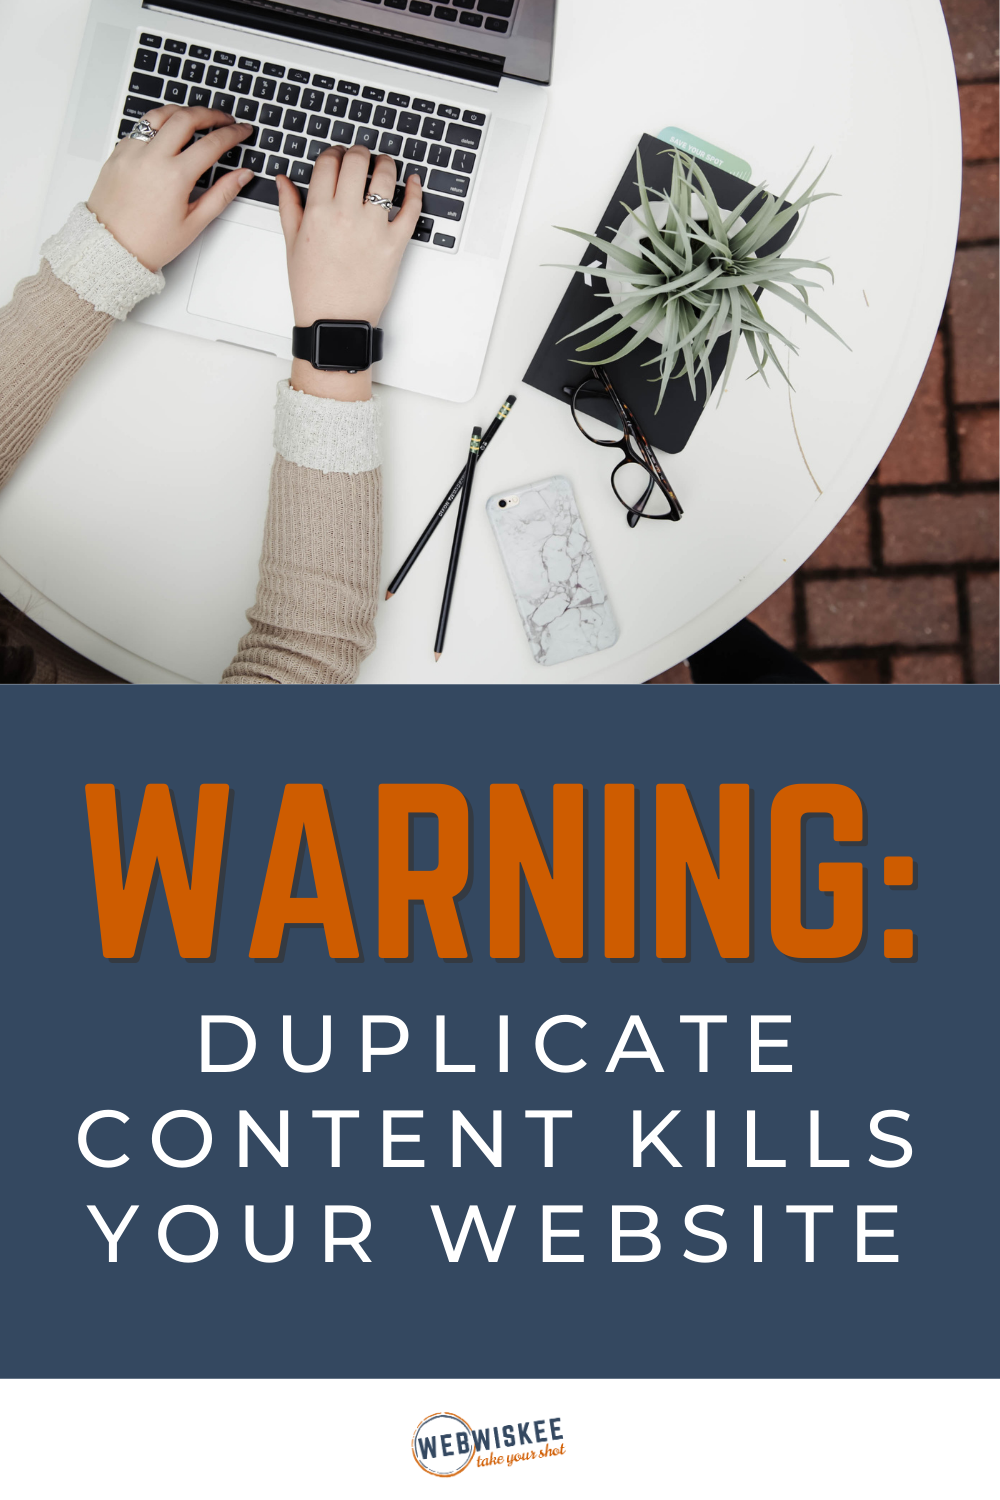 duplicate content kills your website blog post by WebWiskee